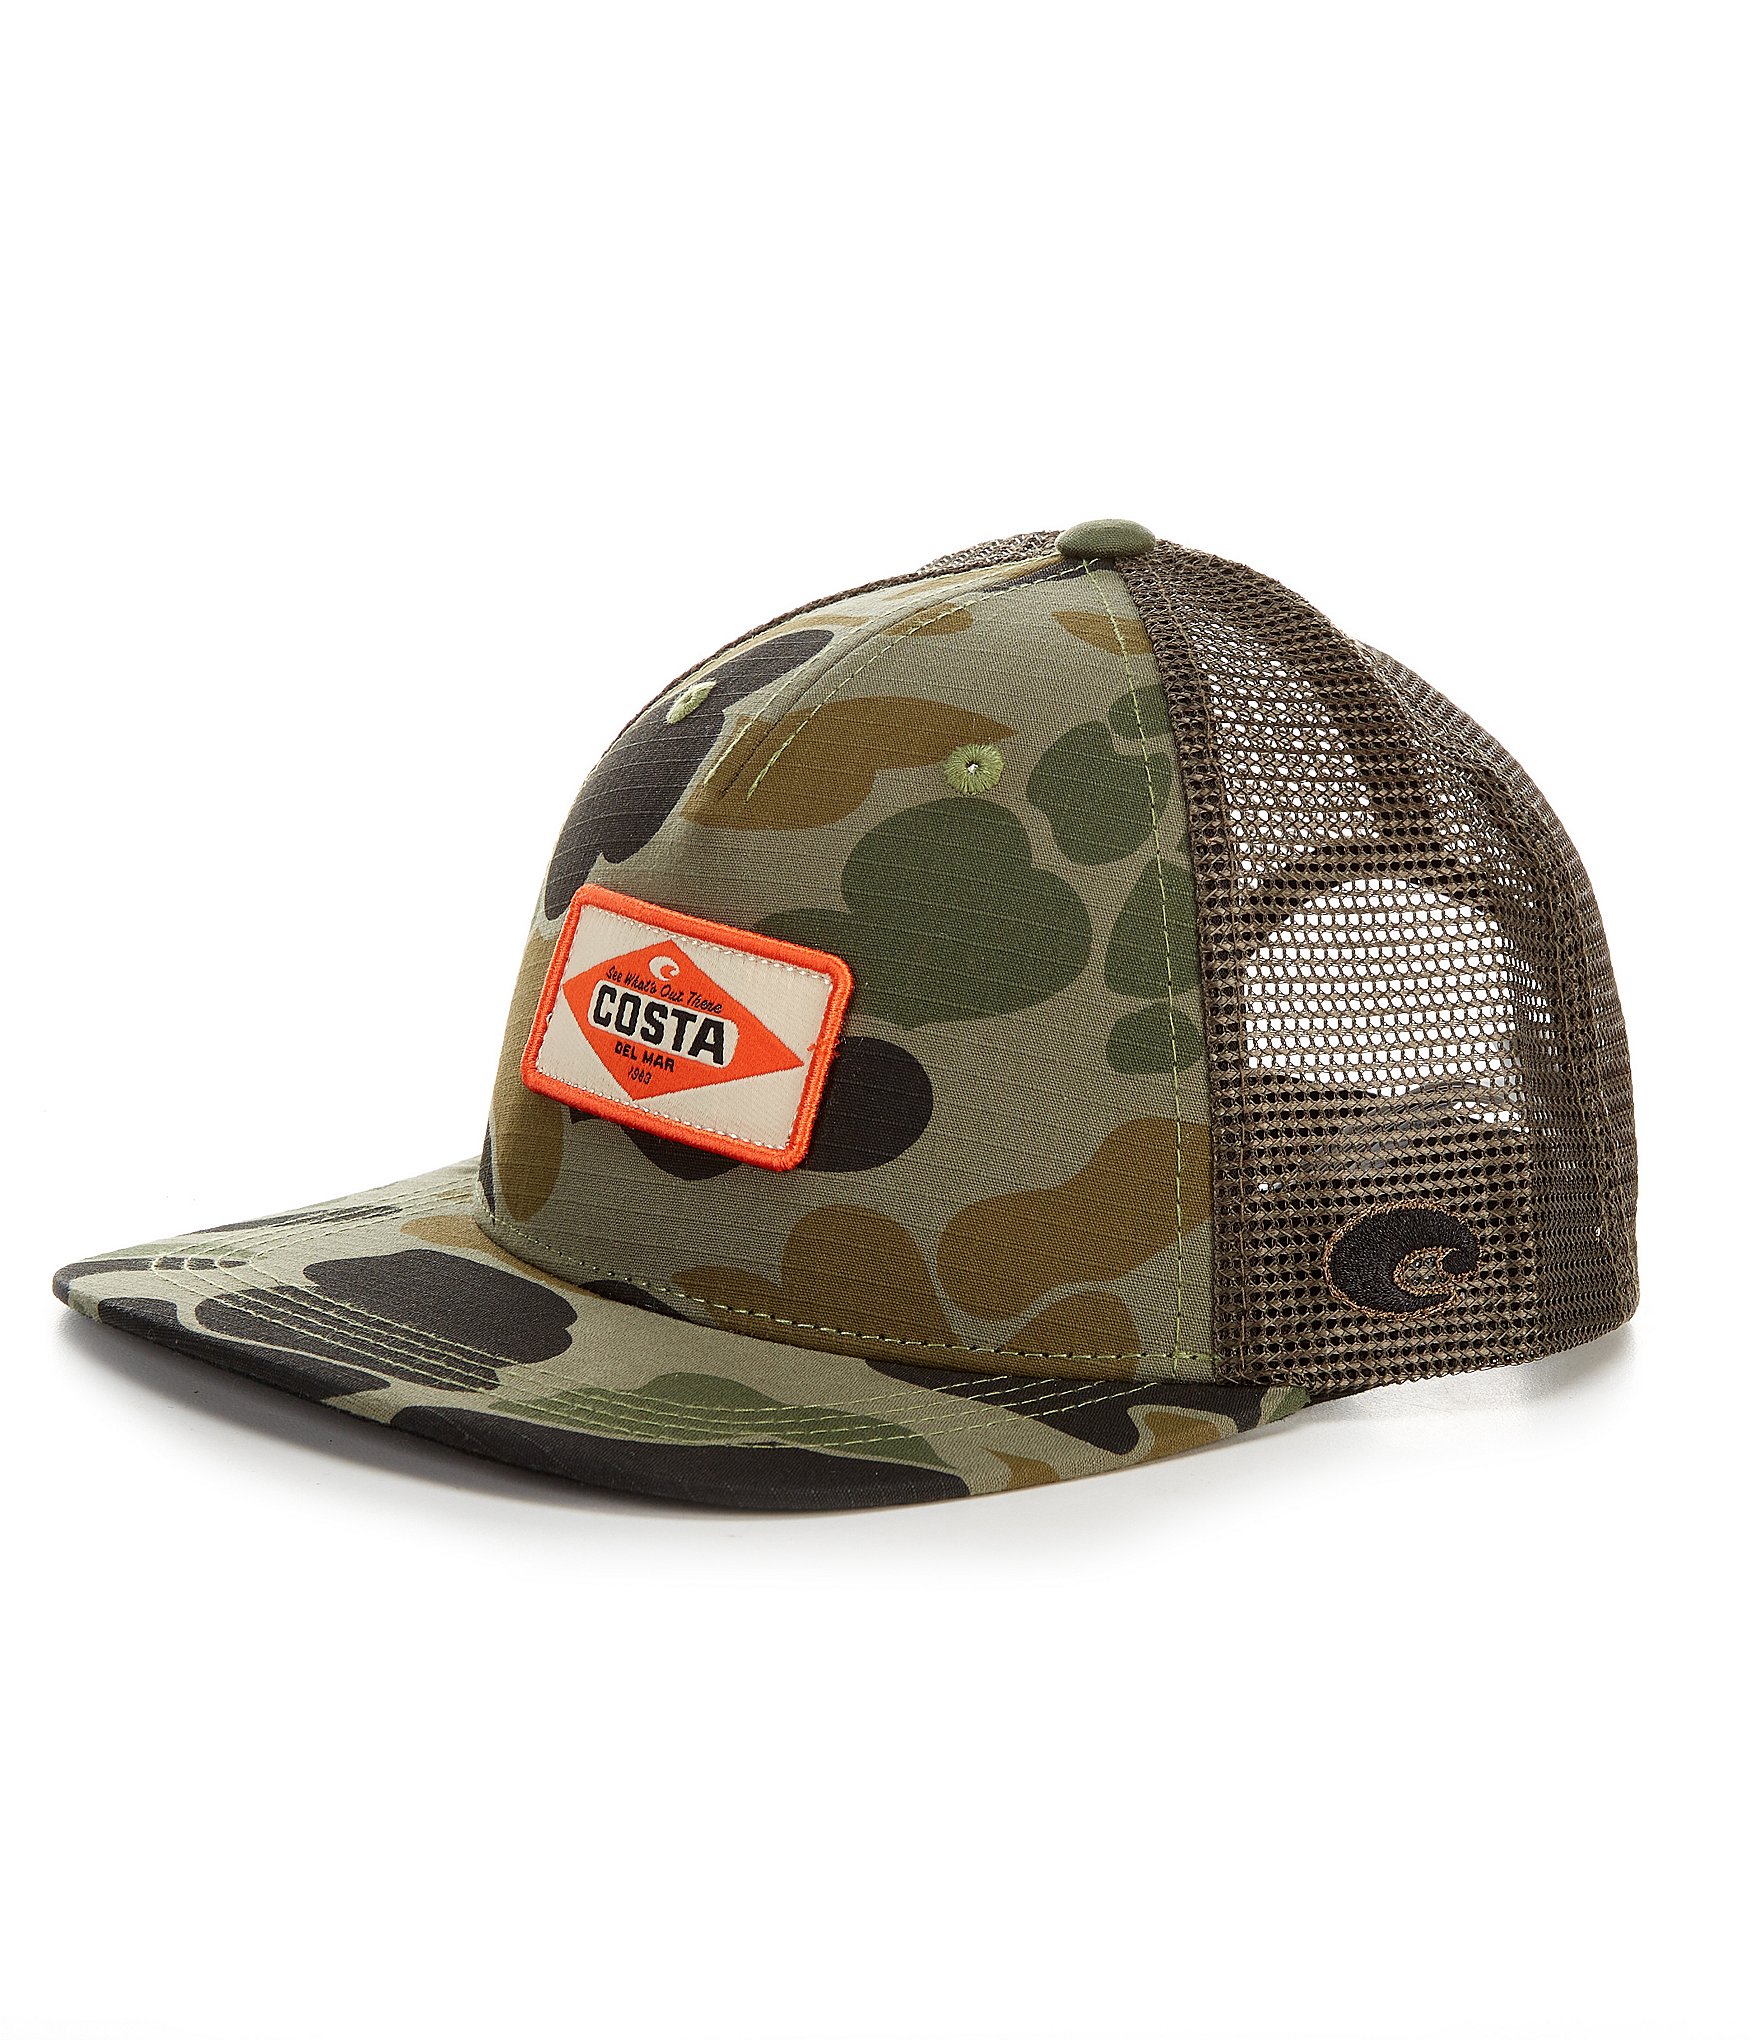 Costa: Army Camo Trucker Hat